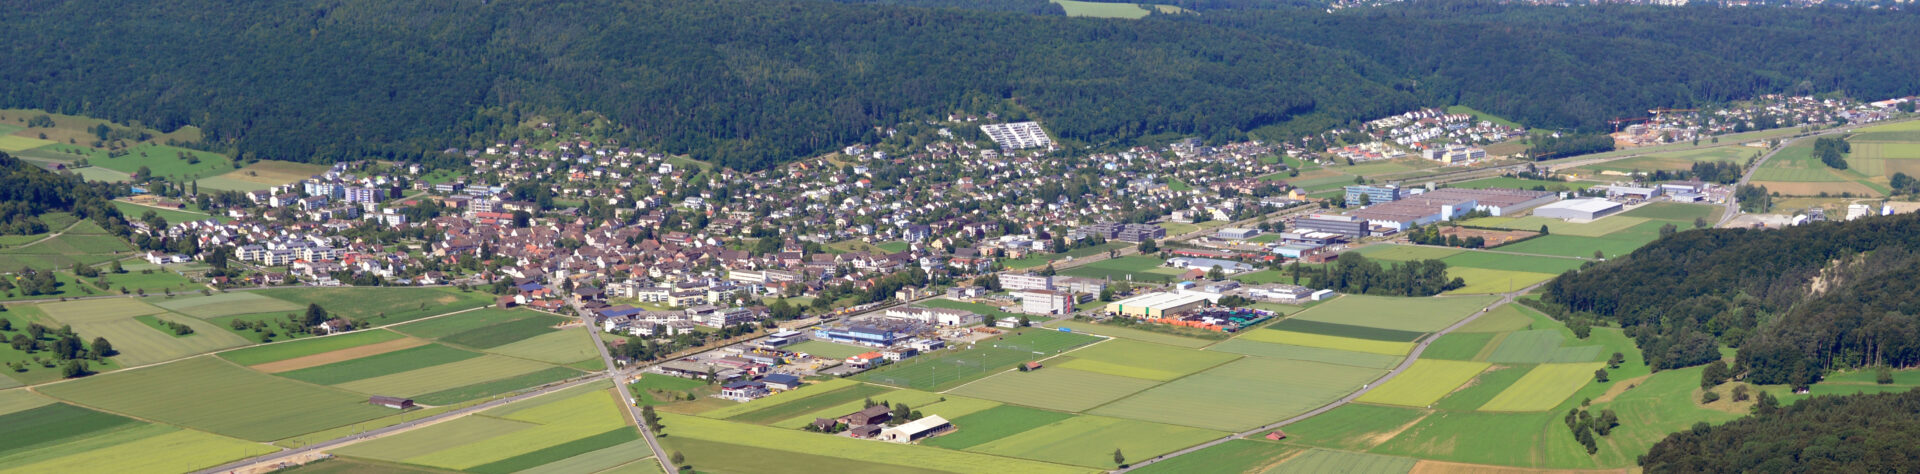 Luftbild Gemeinde Beringen